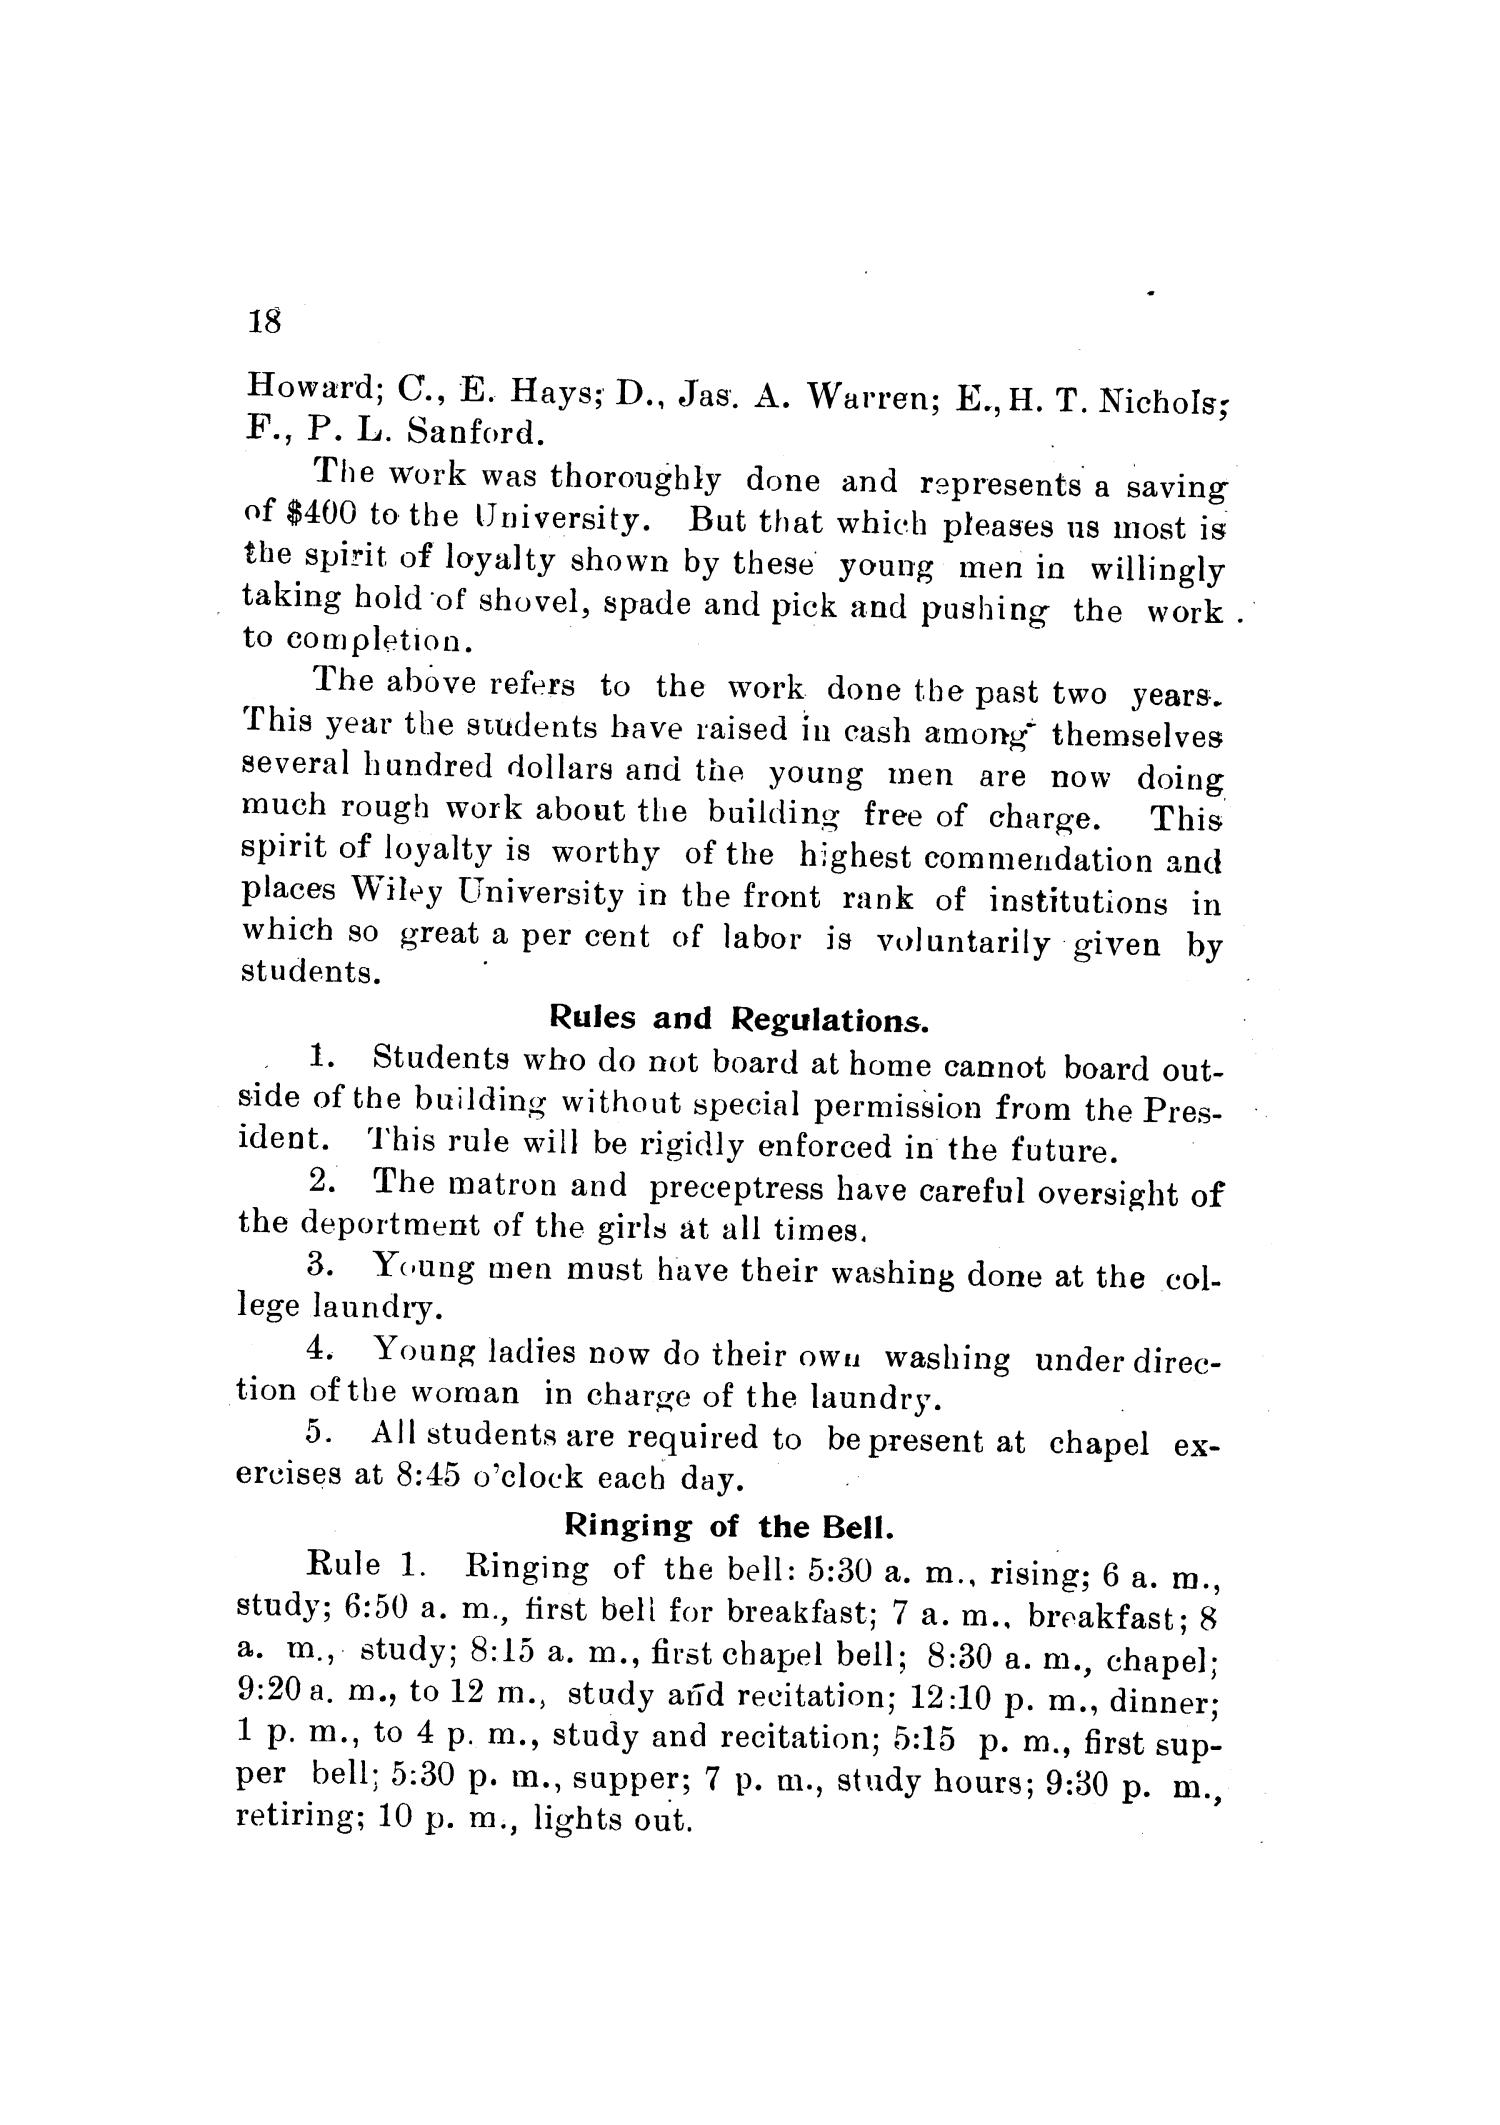 Yearbook of Wiley University, 1902
                                                
                                                    18
                                                